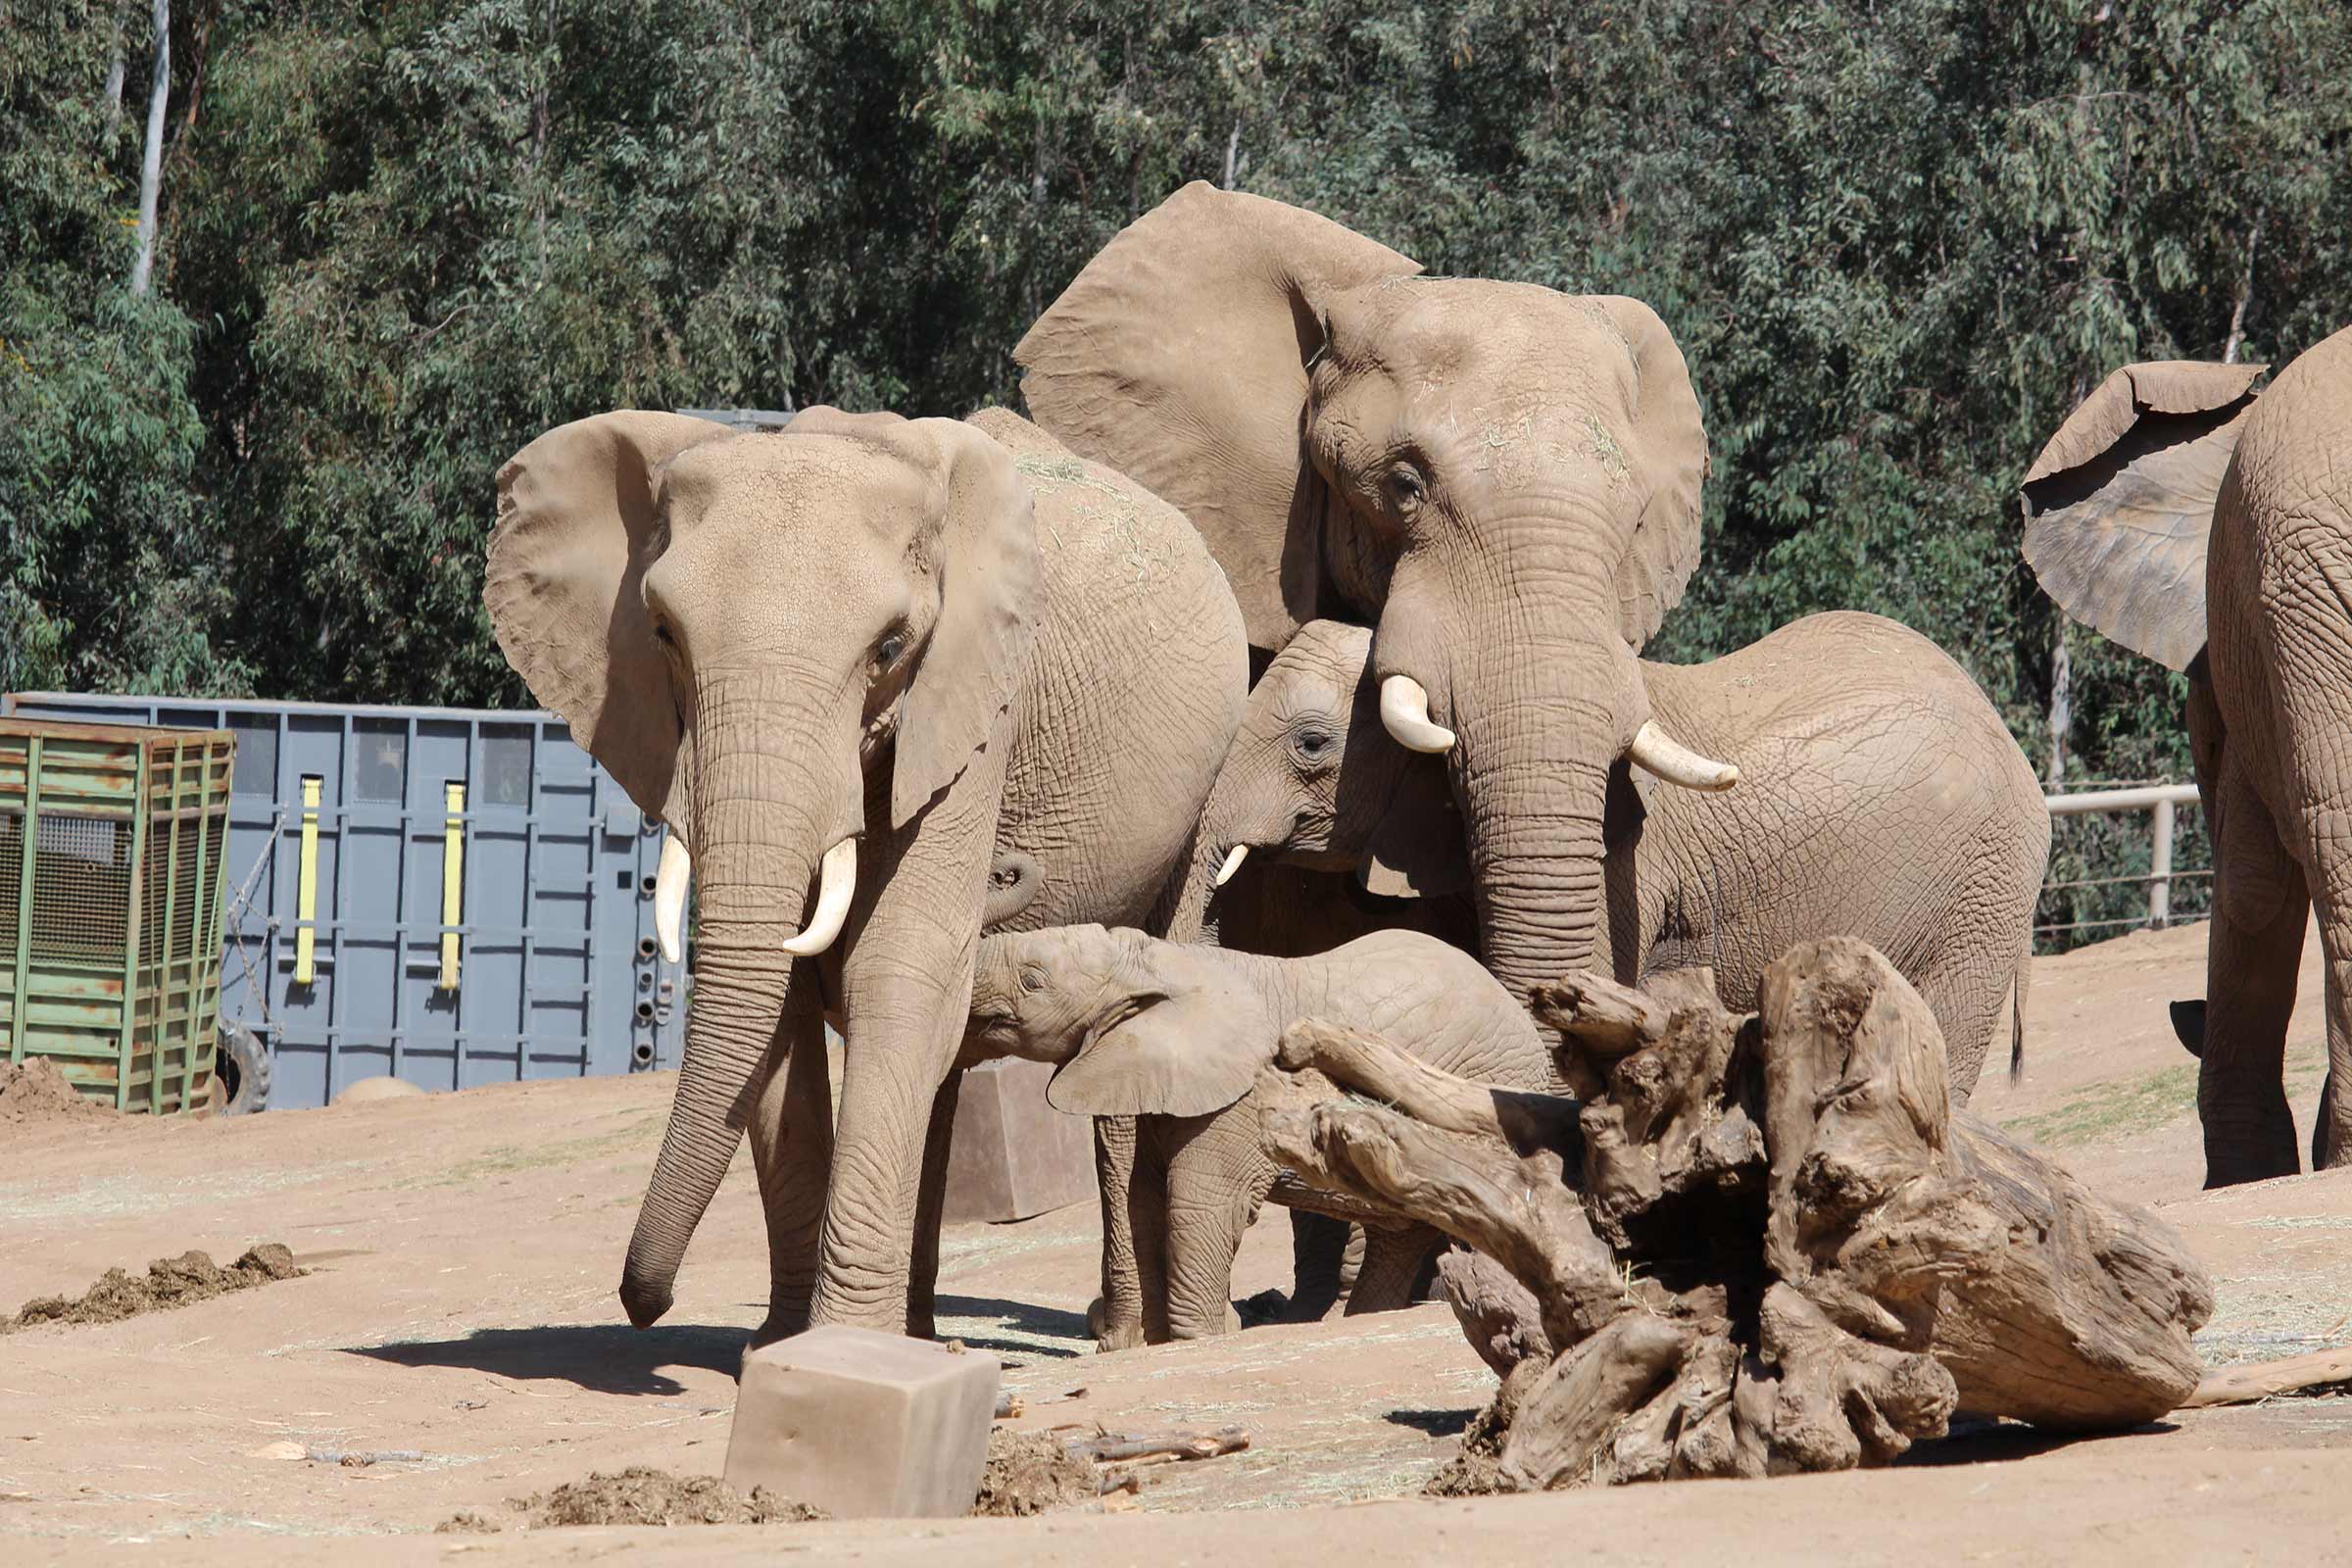 Elephants at the Safari Zoo in San Diego